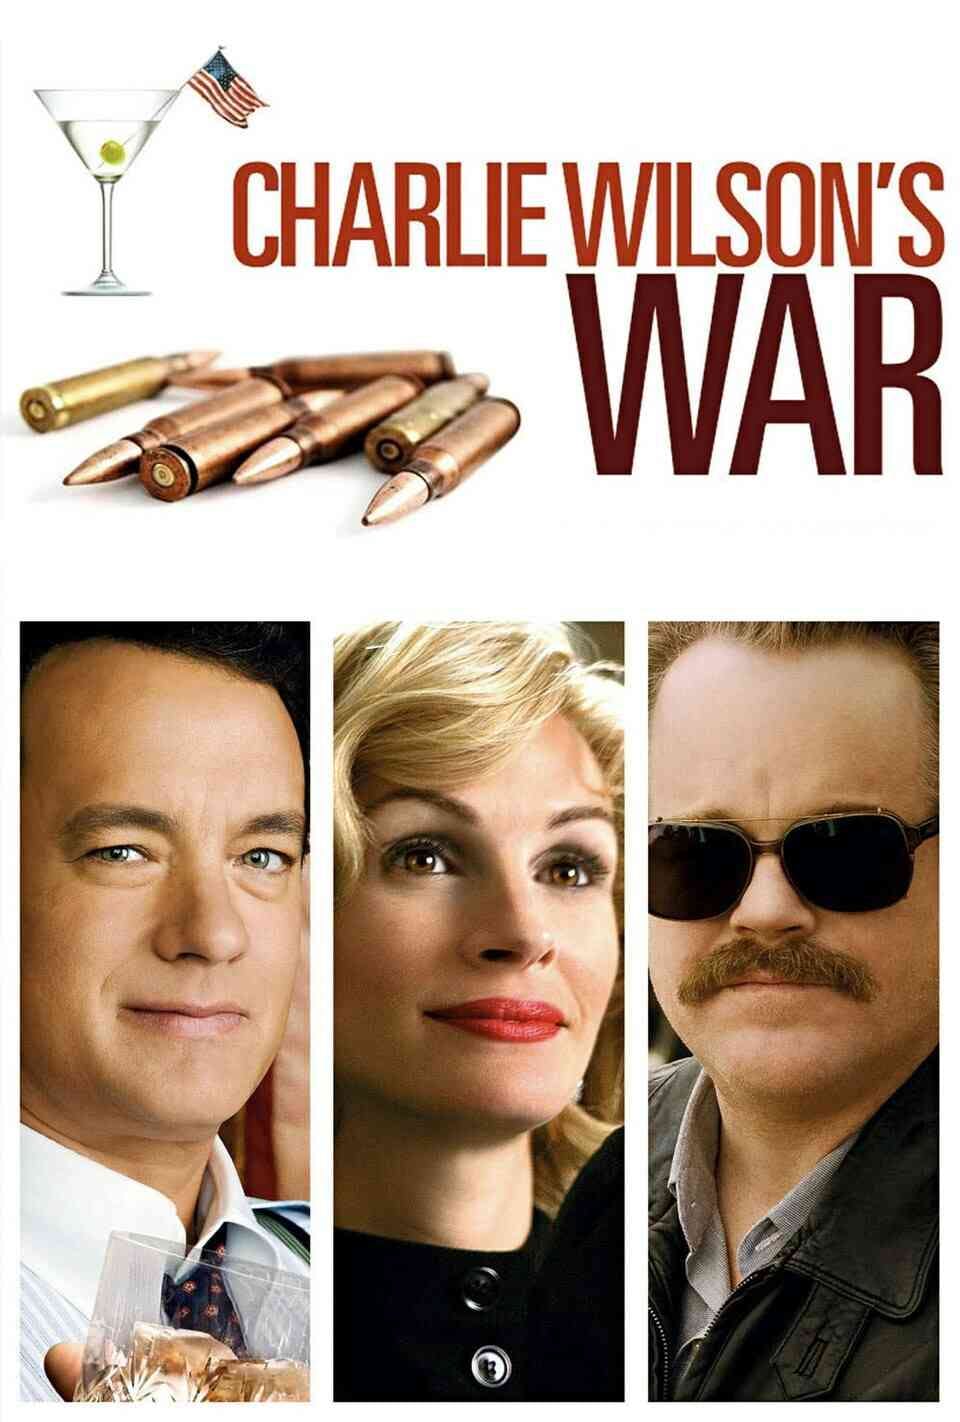 Read Charlie Wilson's War screenplay.